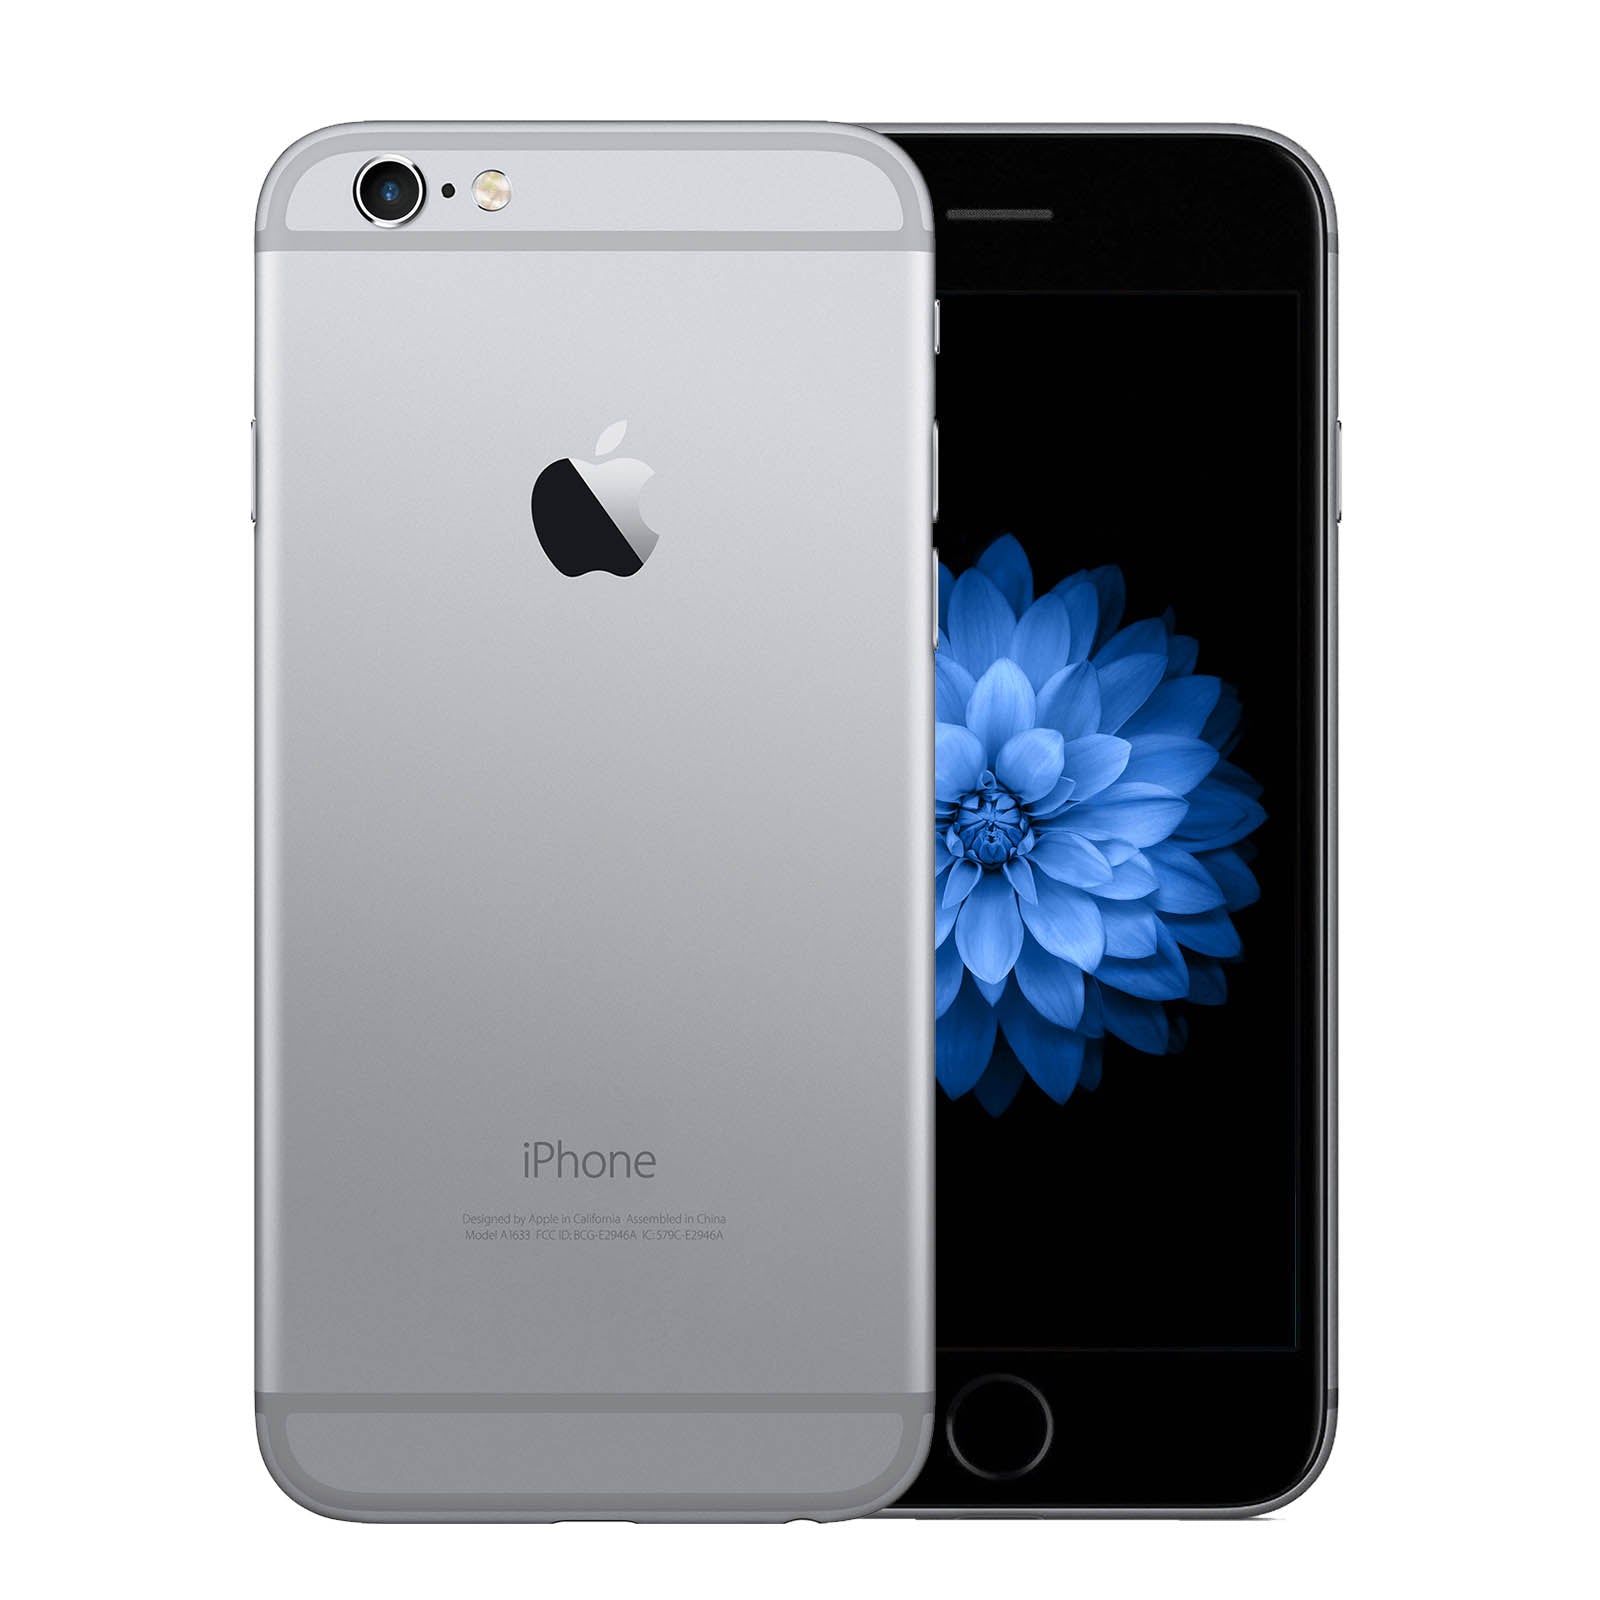 Apple iPhone 6 64GB Space Grey Pristine - Unlocked